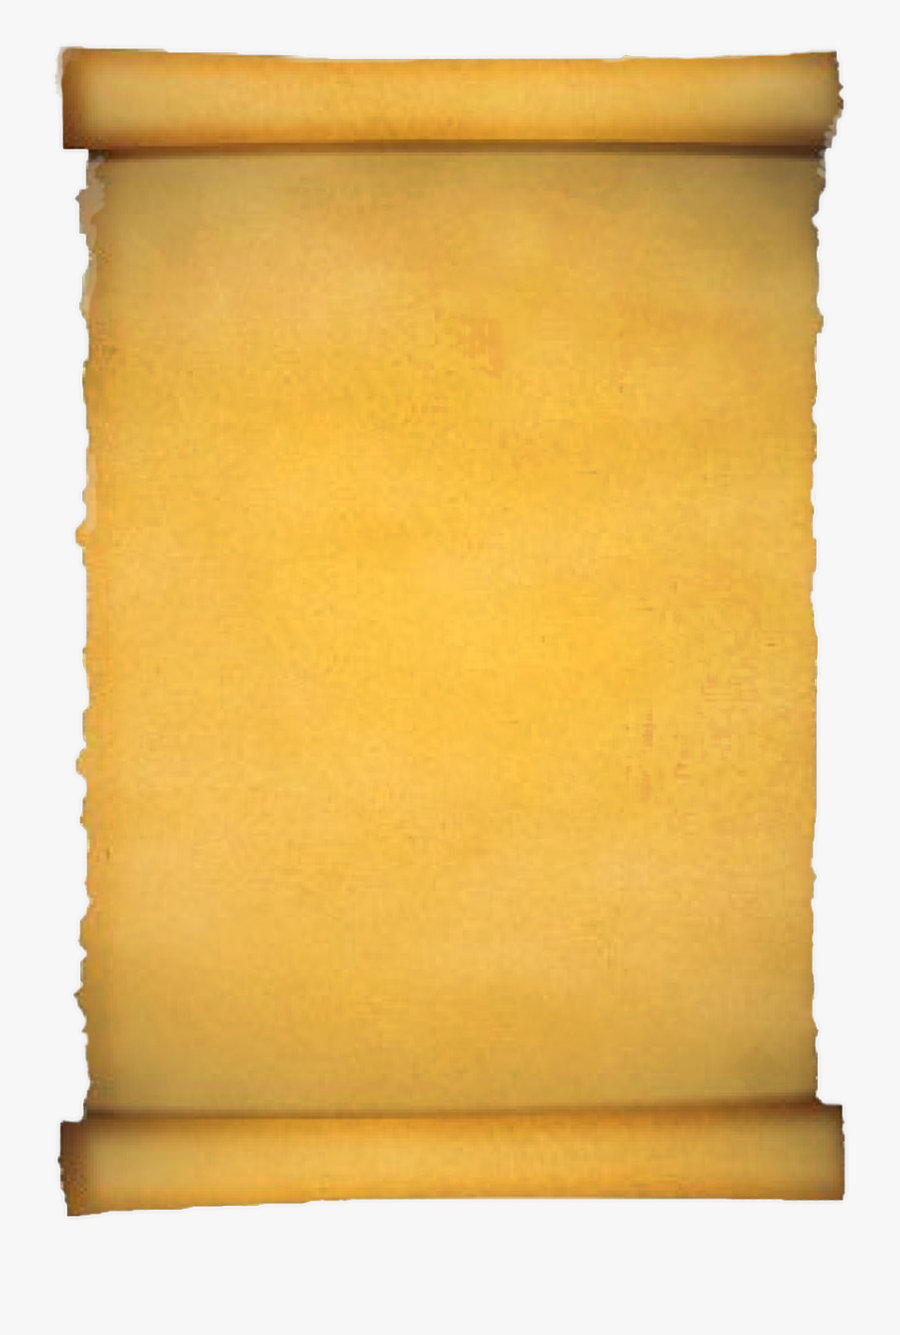 Paper Scroll Parchment Clip Art - Old Paper Frame Png, Transparent Clipart